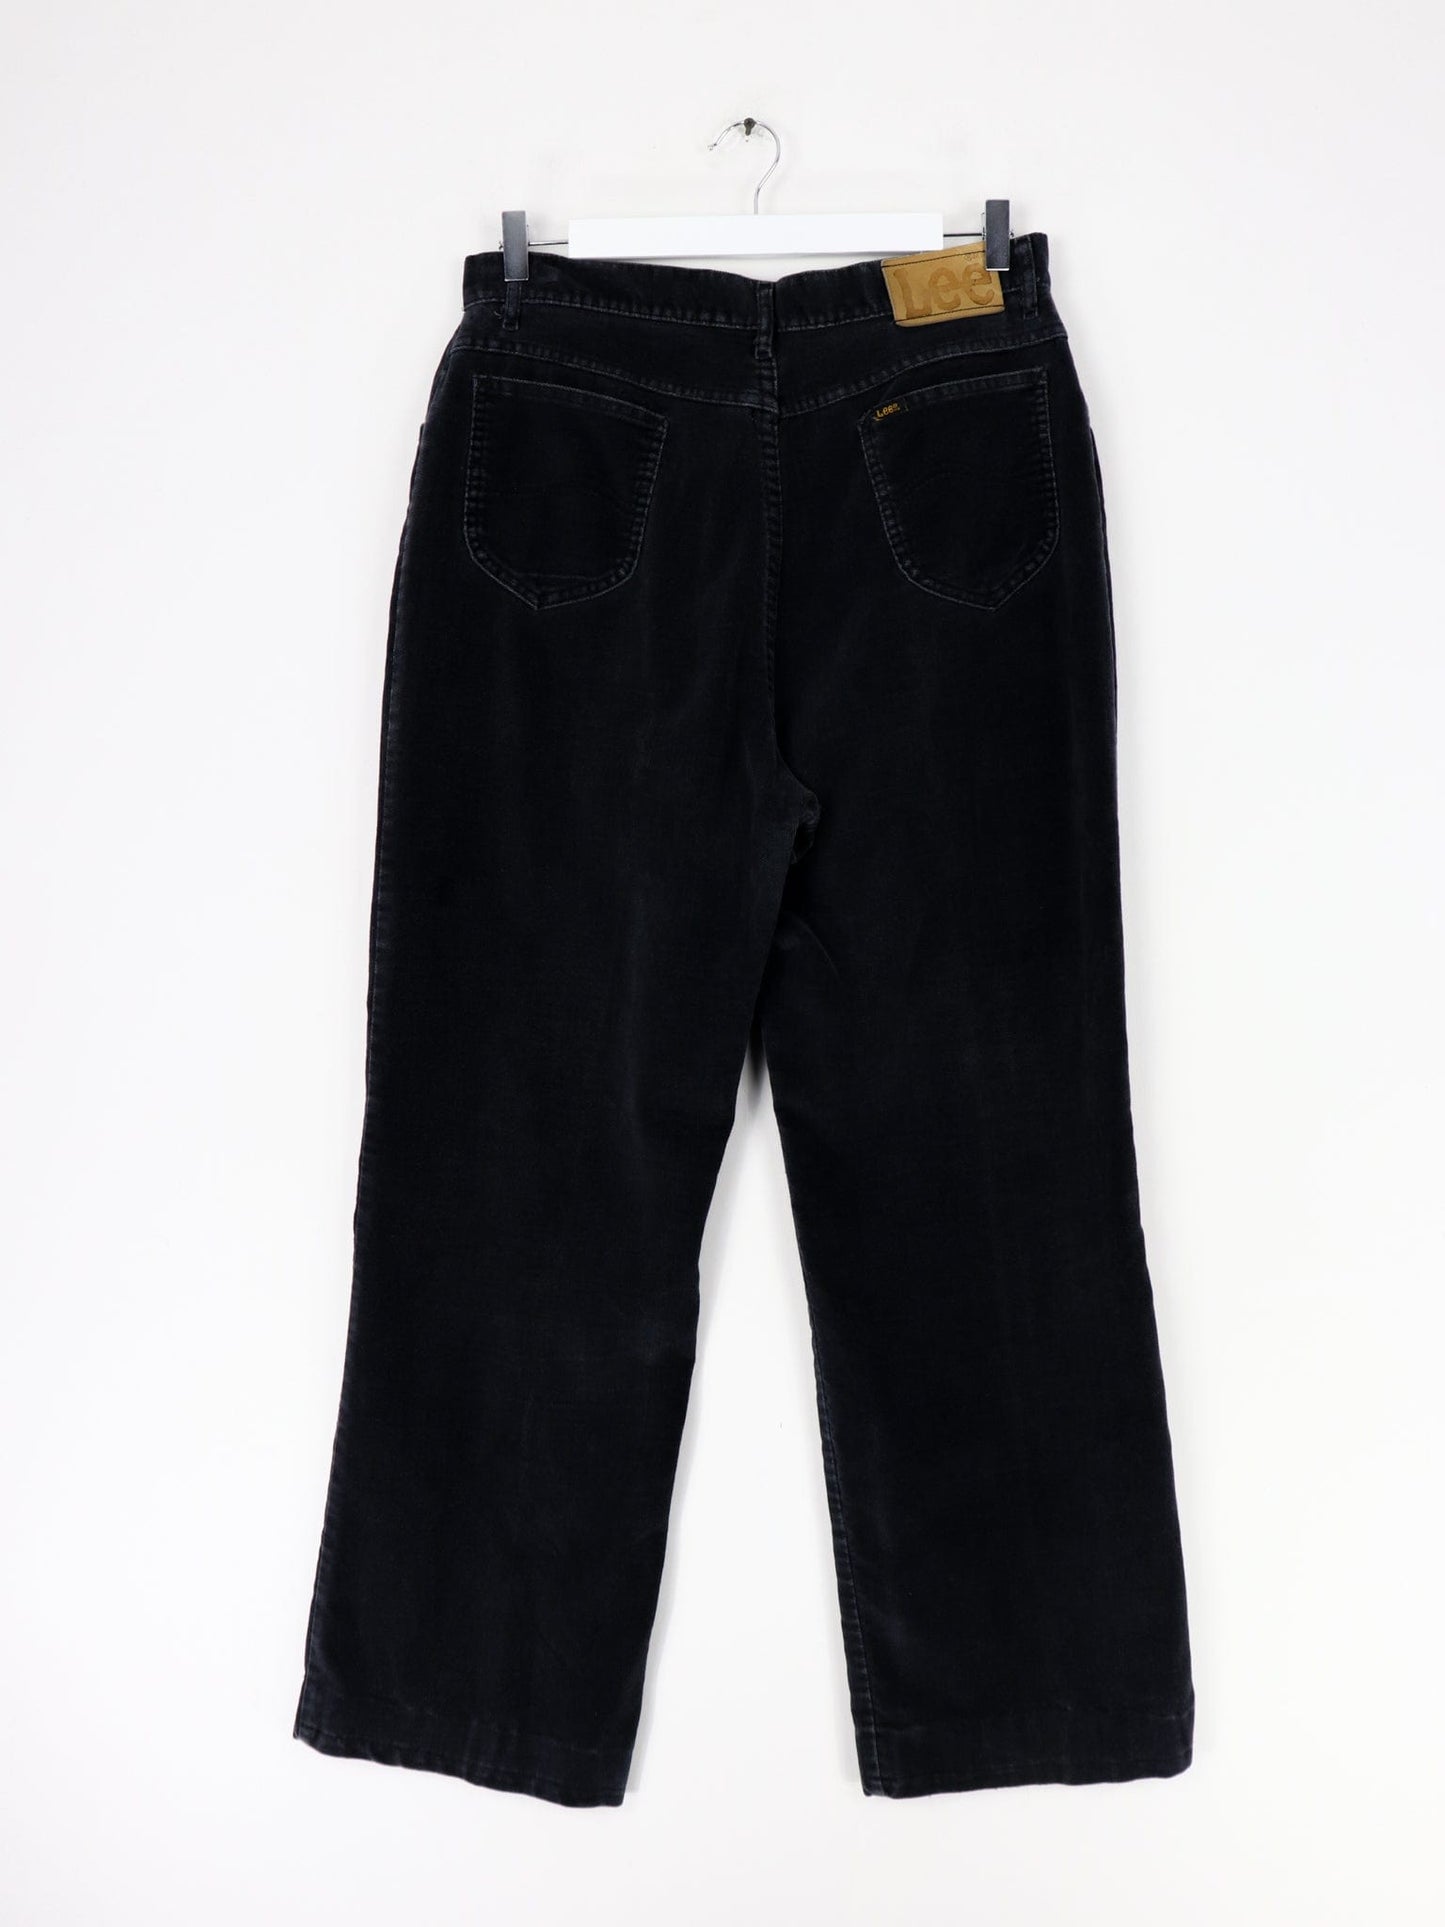 Lee Pants Vintage Lee Dress Pants Women's Size 18 (32x28)